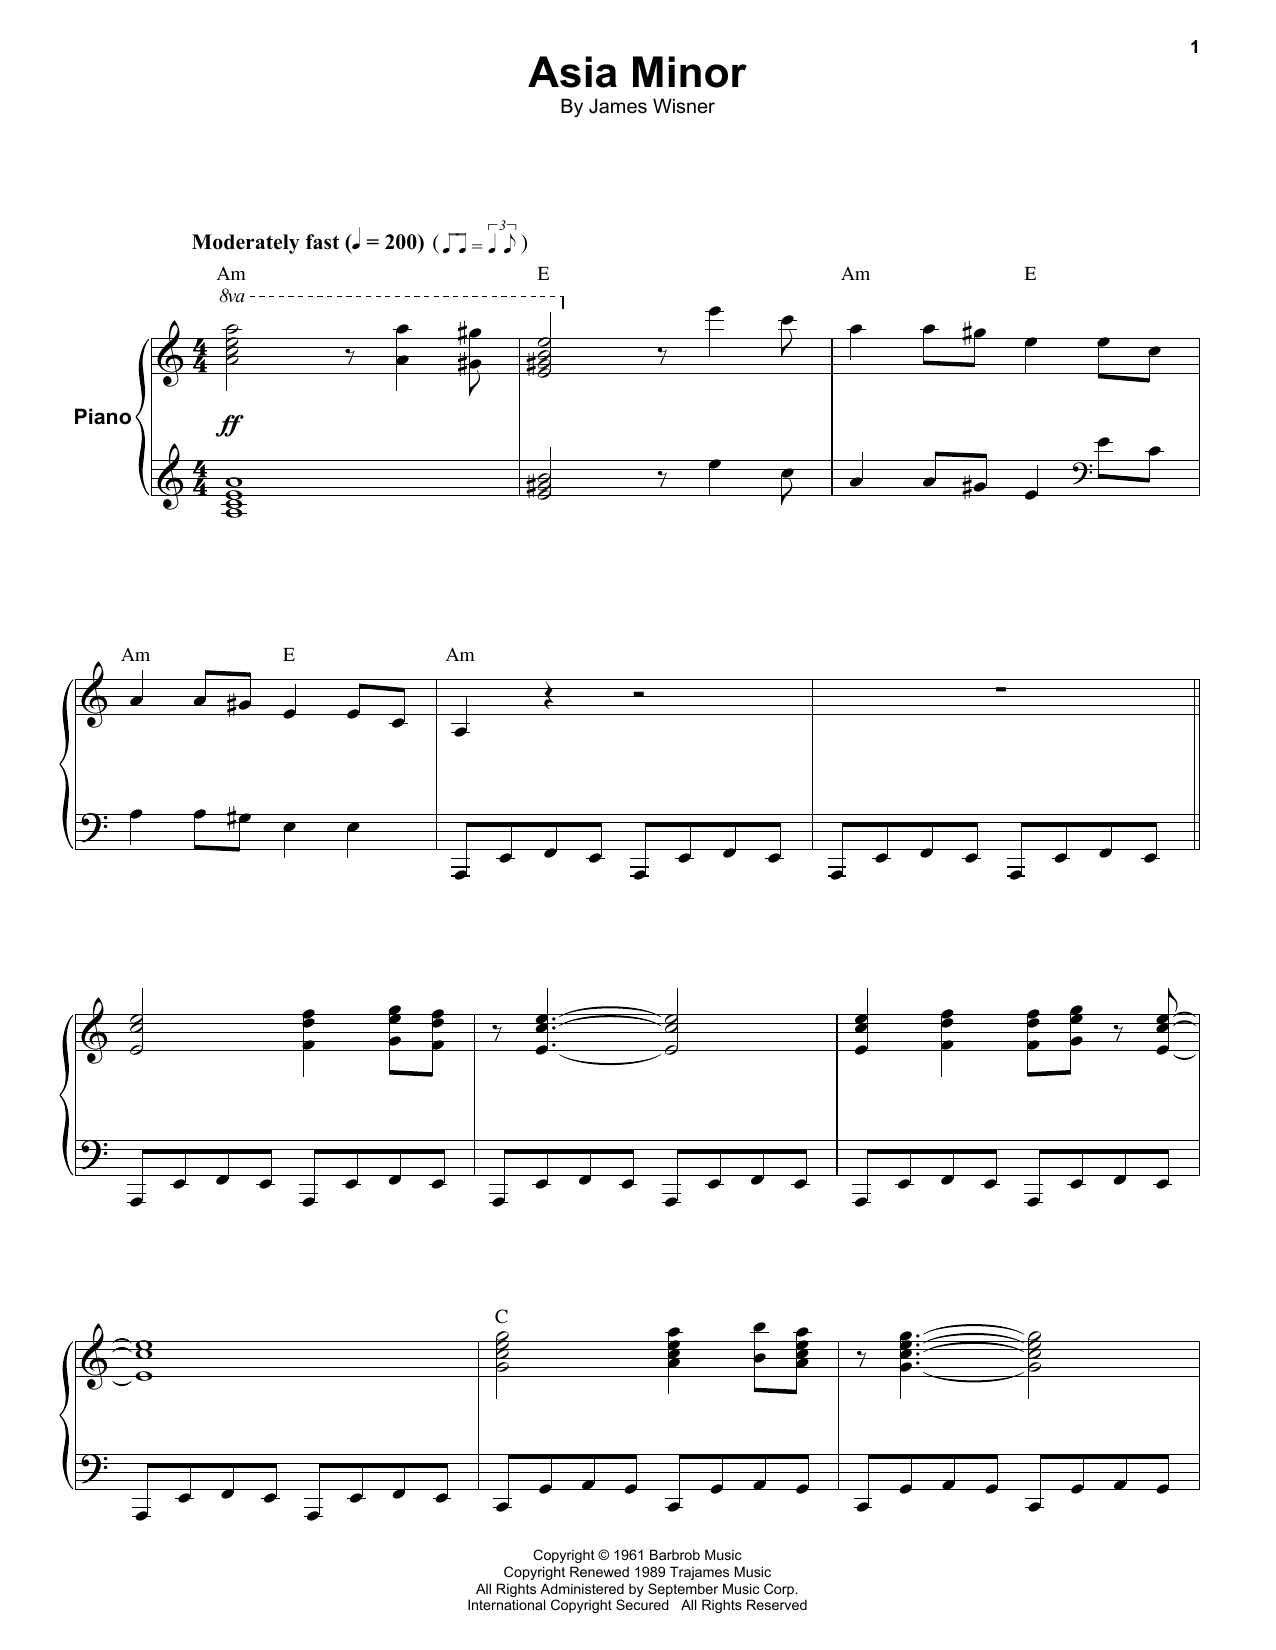 Kokomo Asia Minor Sheet Music Notes & Chords for Keyboard Transcription - Download or Print PDF